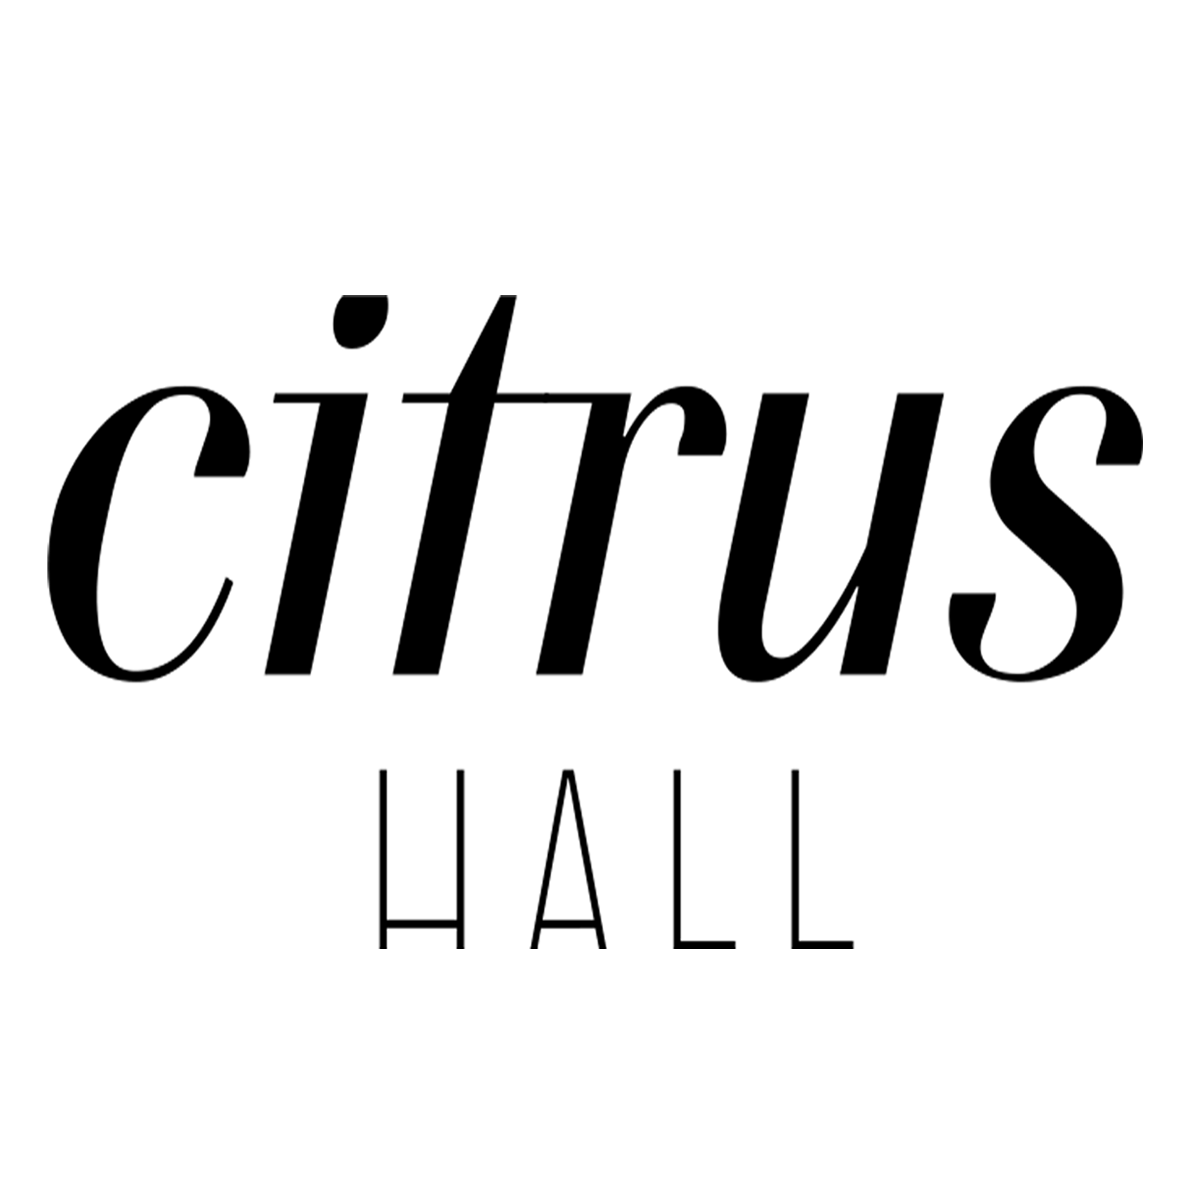 Citrus Hall